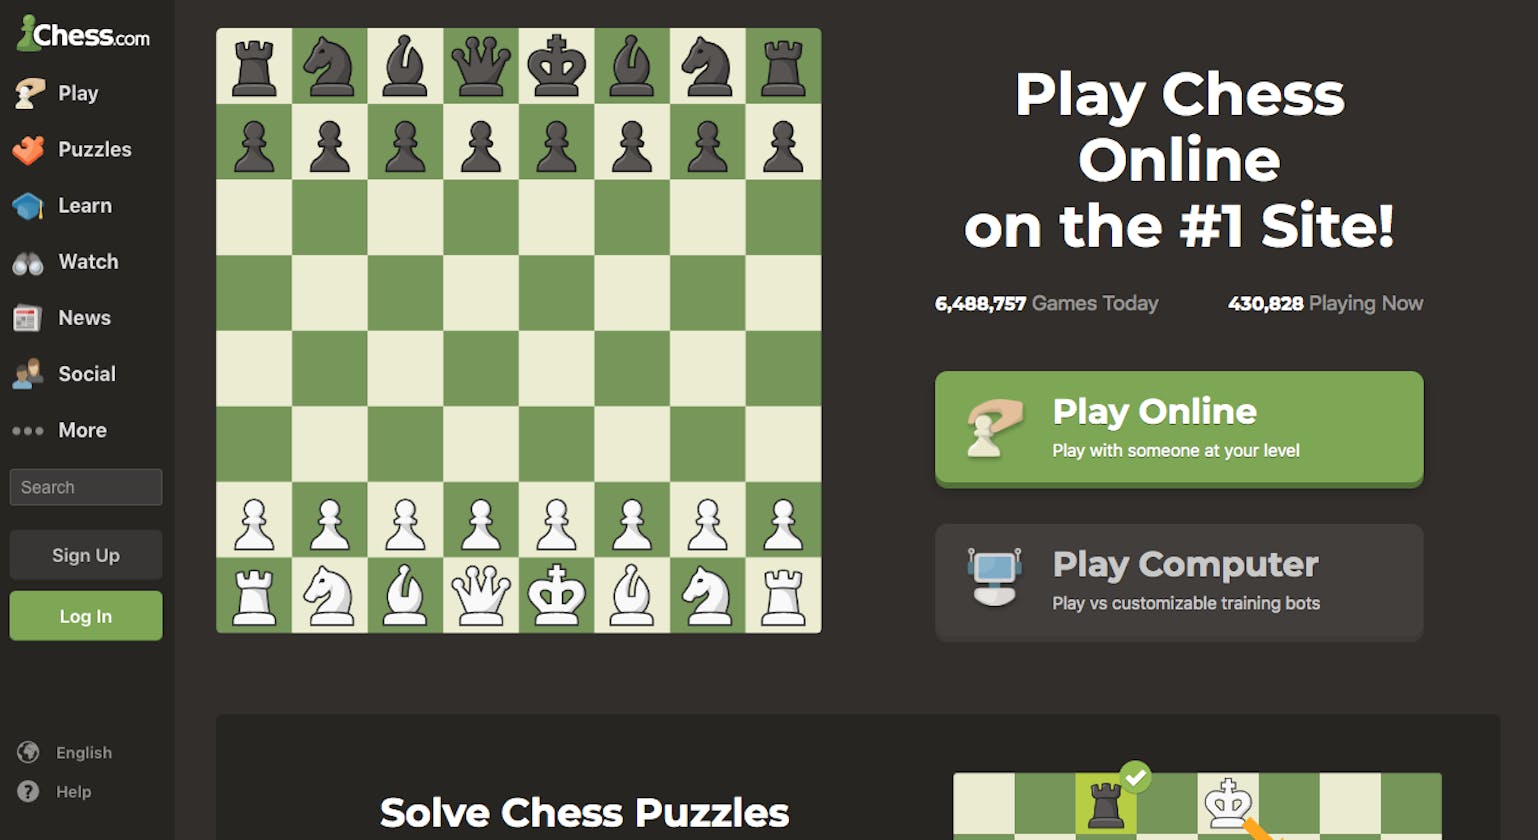 Product Teardown of Chess.com